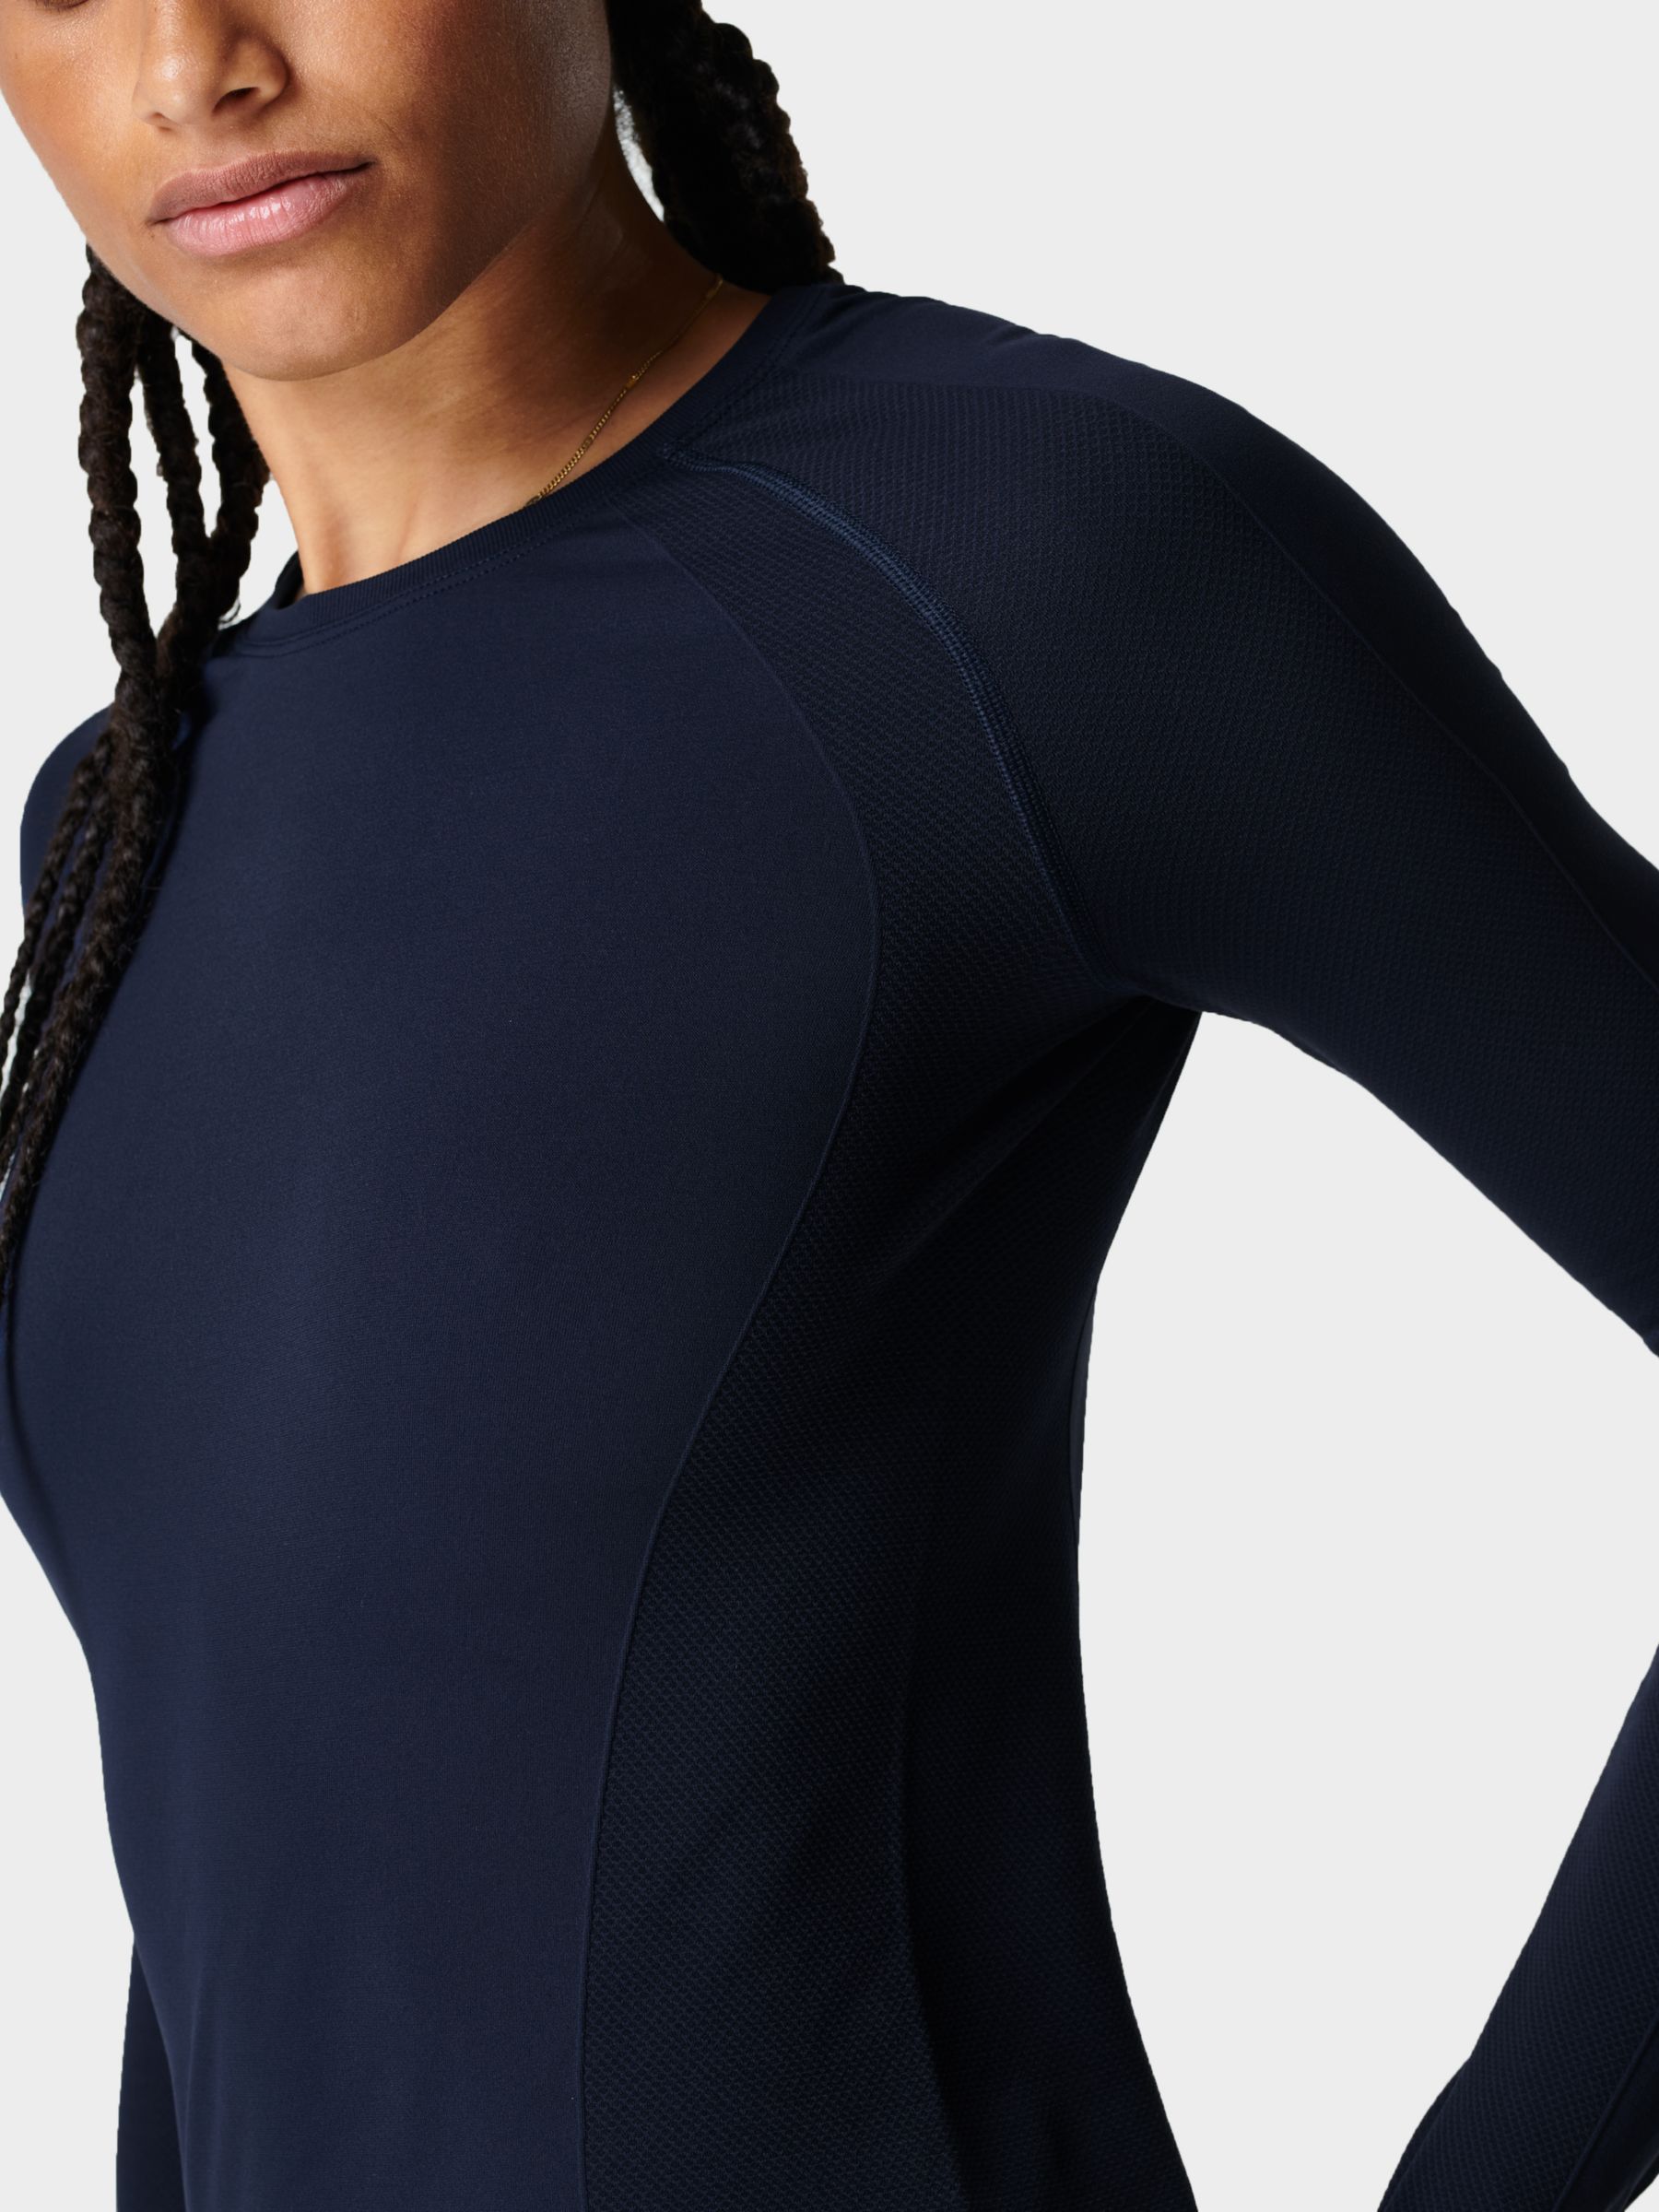 Sweaty Betty Athlete Seamless Long Sleeve Gym Top, Navy Blue, XS